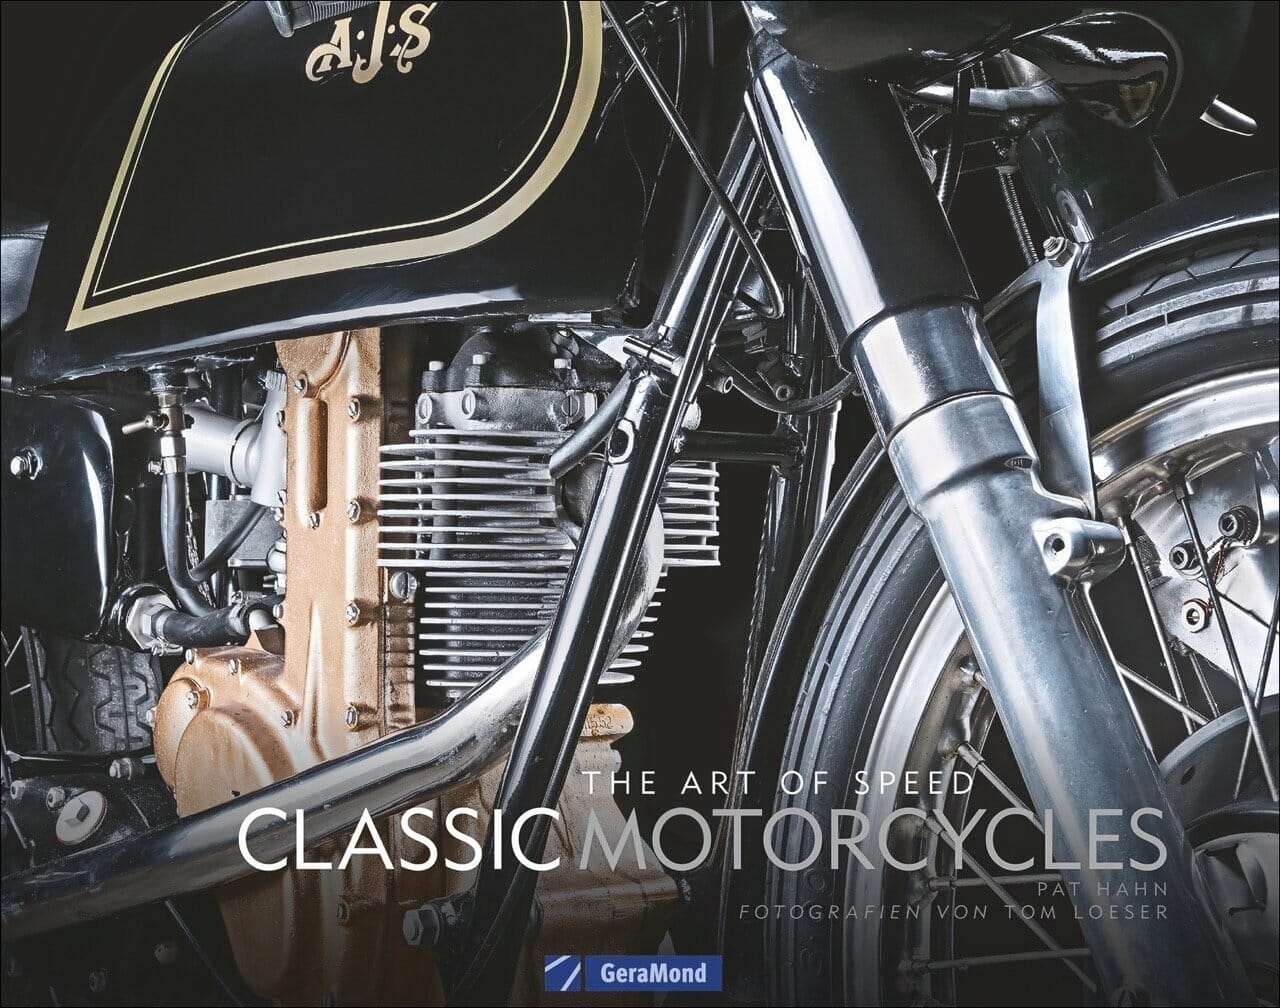 The Art of Speed: Classic Motorcycles – die revolutionärsten Motorräder der Welt